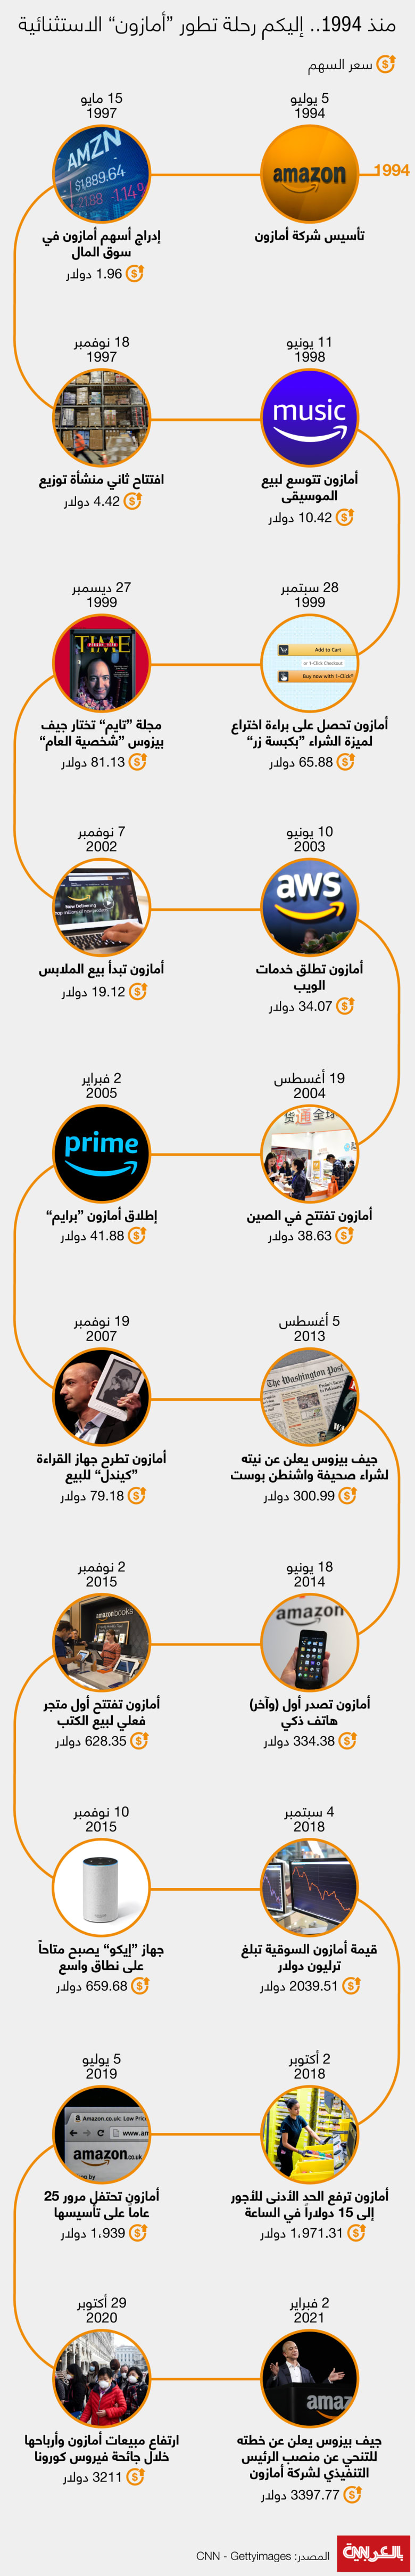  Amazon-evolution-timeline-2021